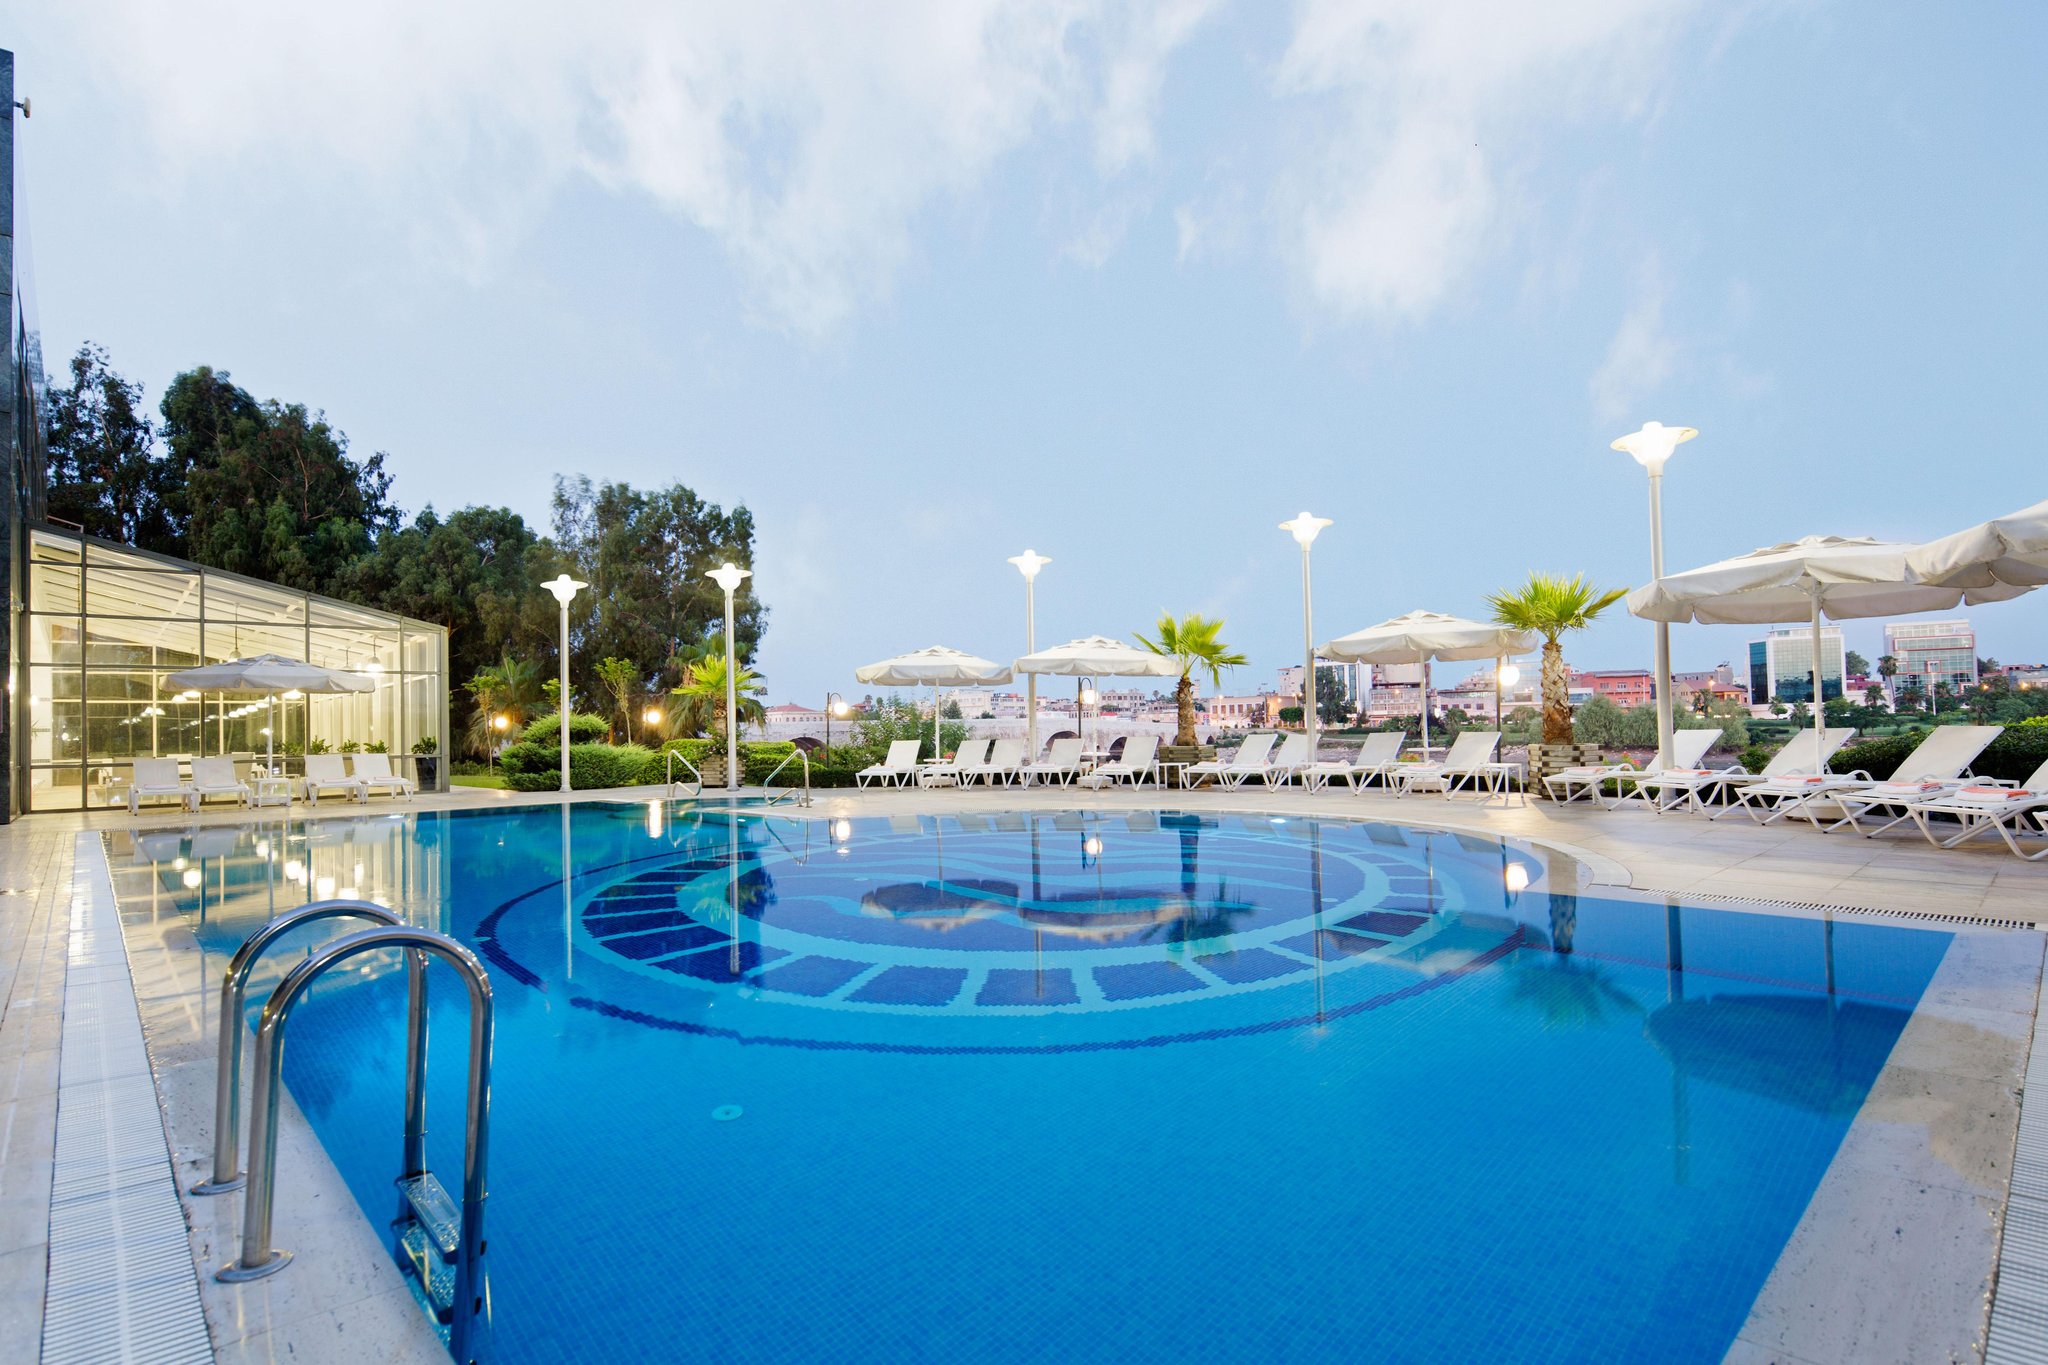 Adana Hilton SA (Adana Hiltonsa Hotel)